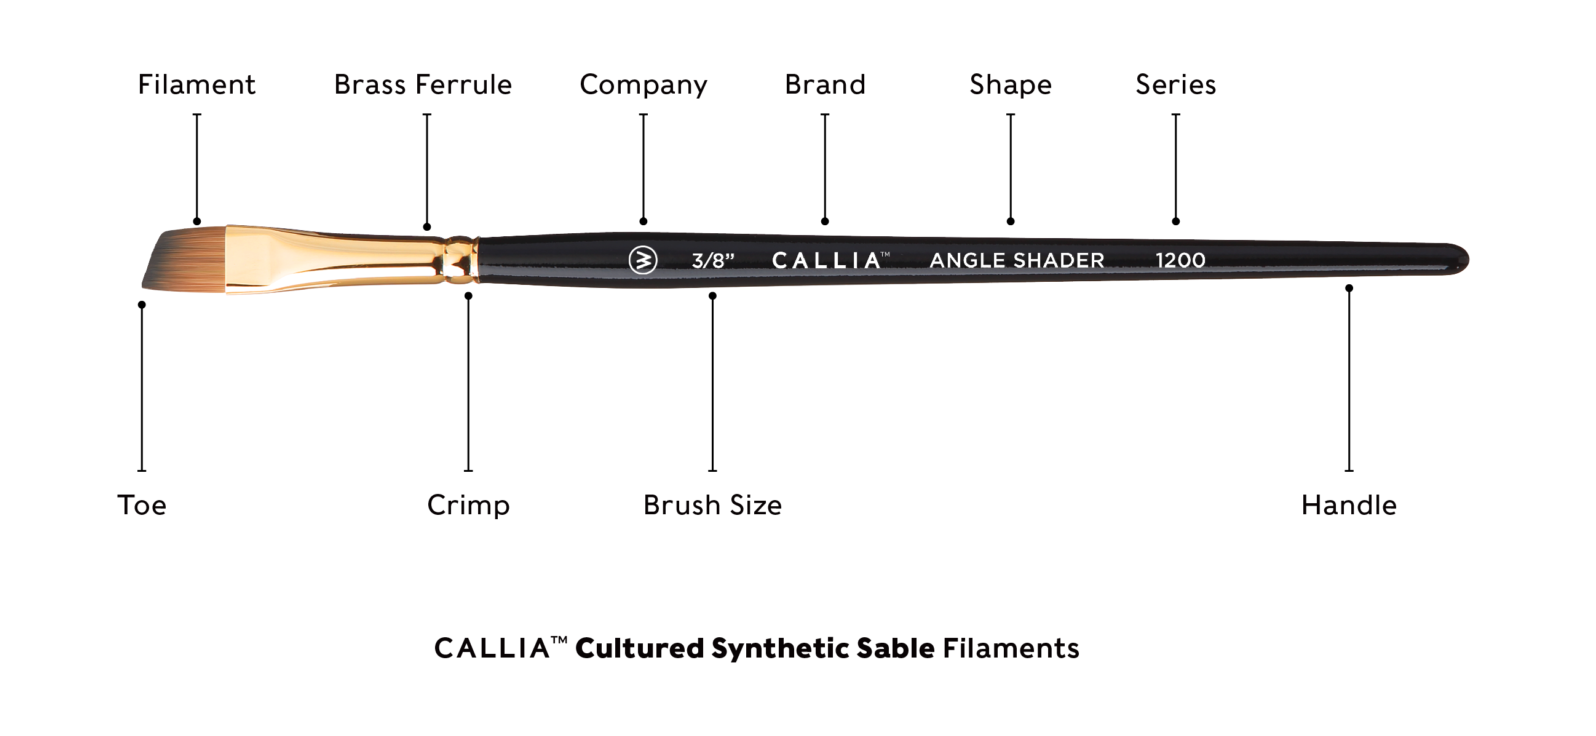 Callia Angle Shader